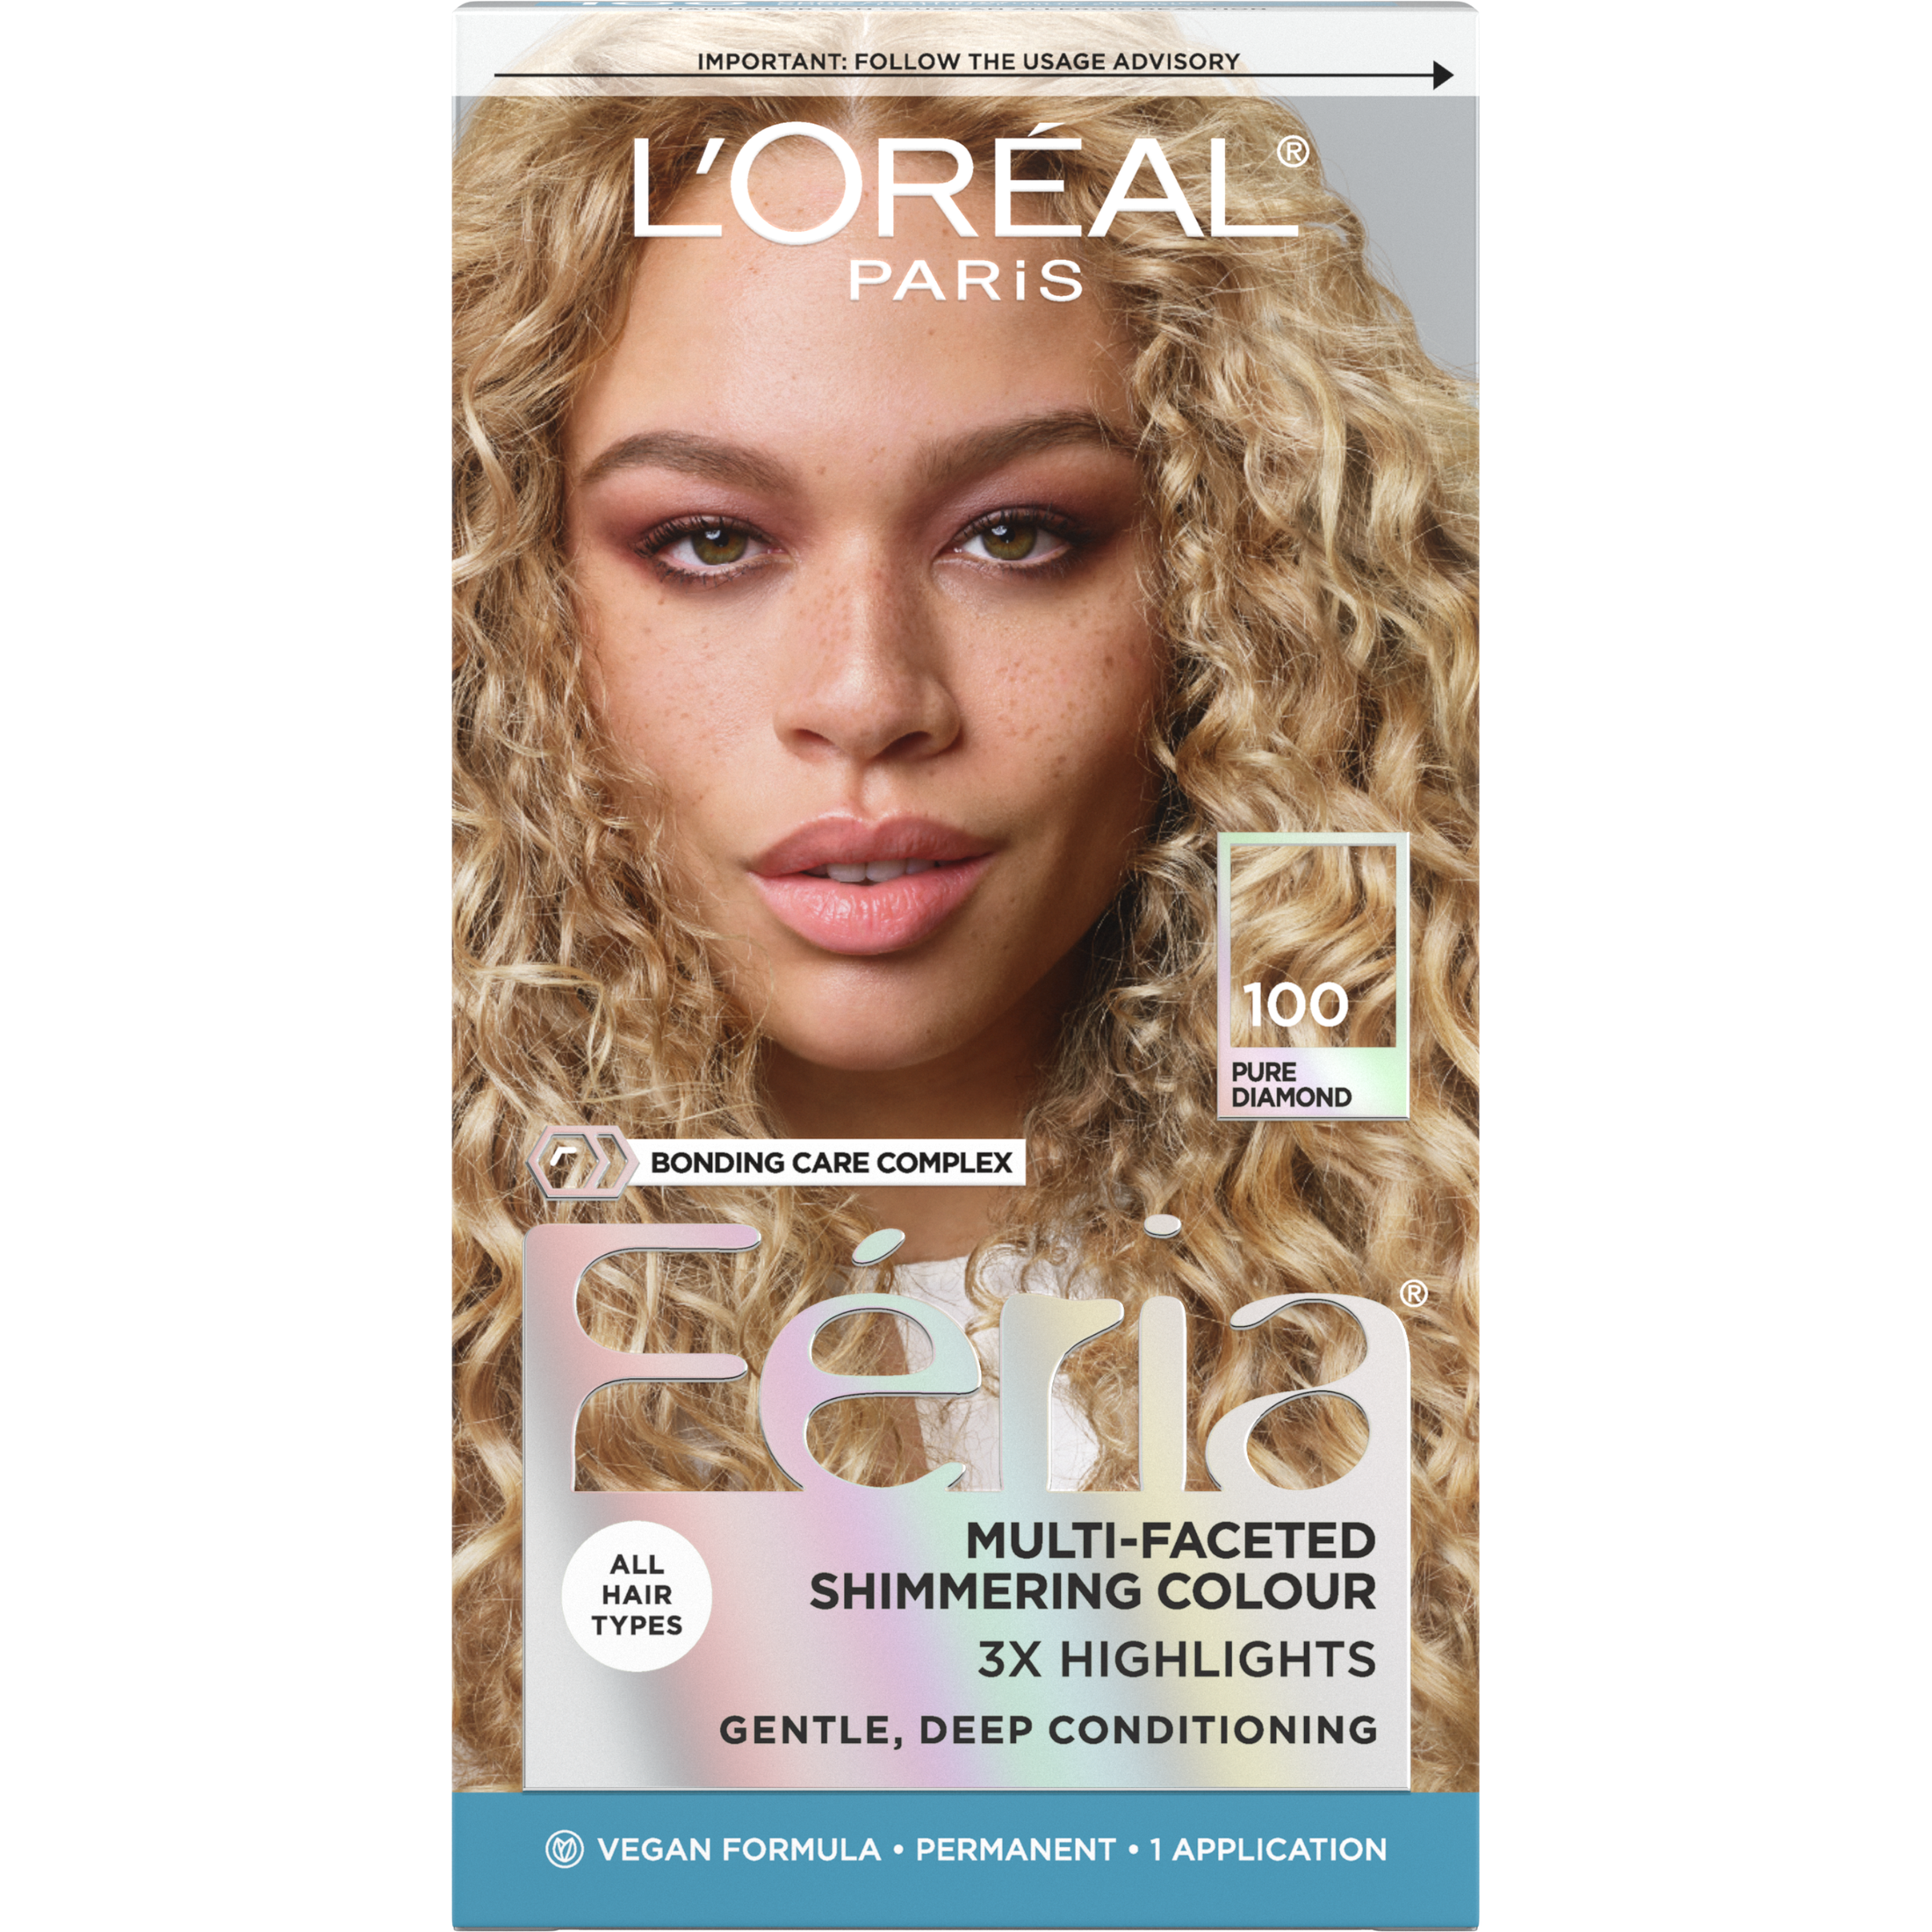 L'Oreal Paris Feria Permanent Hair Color, 100 Pure Diamond - image 1 of 8